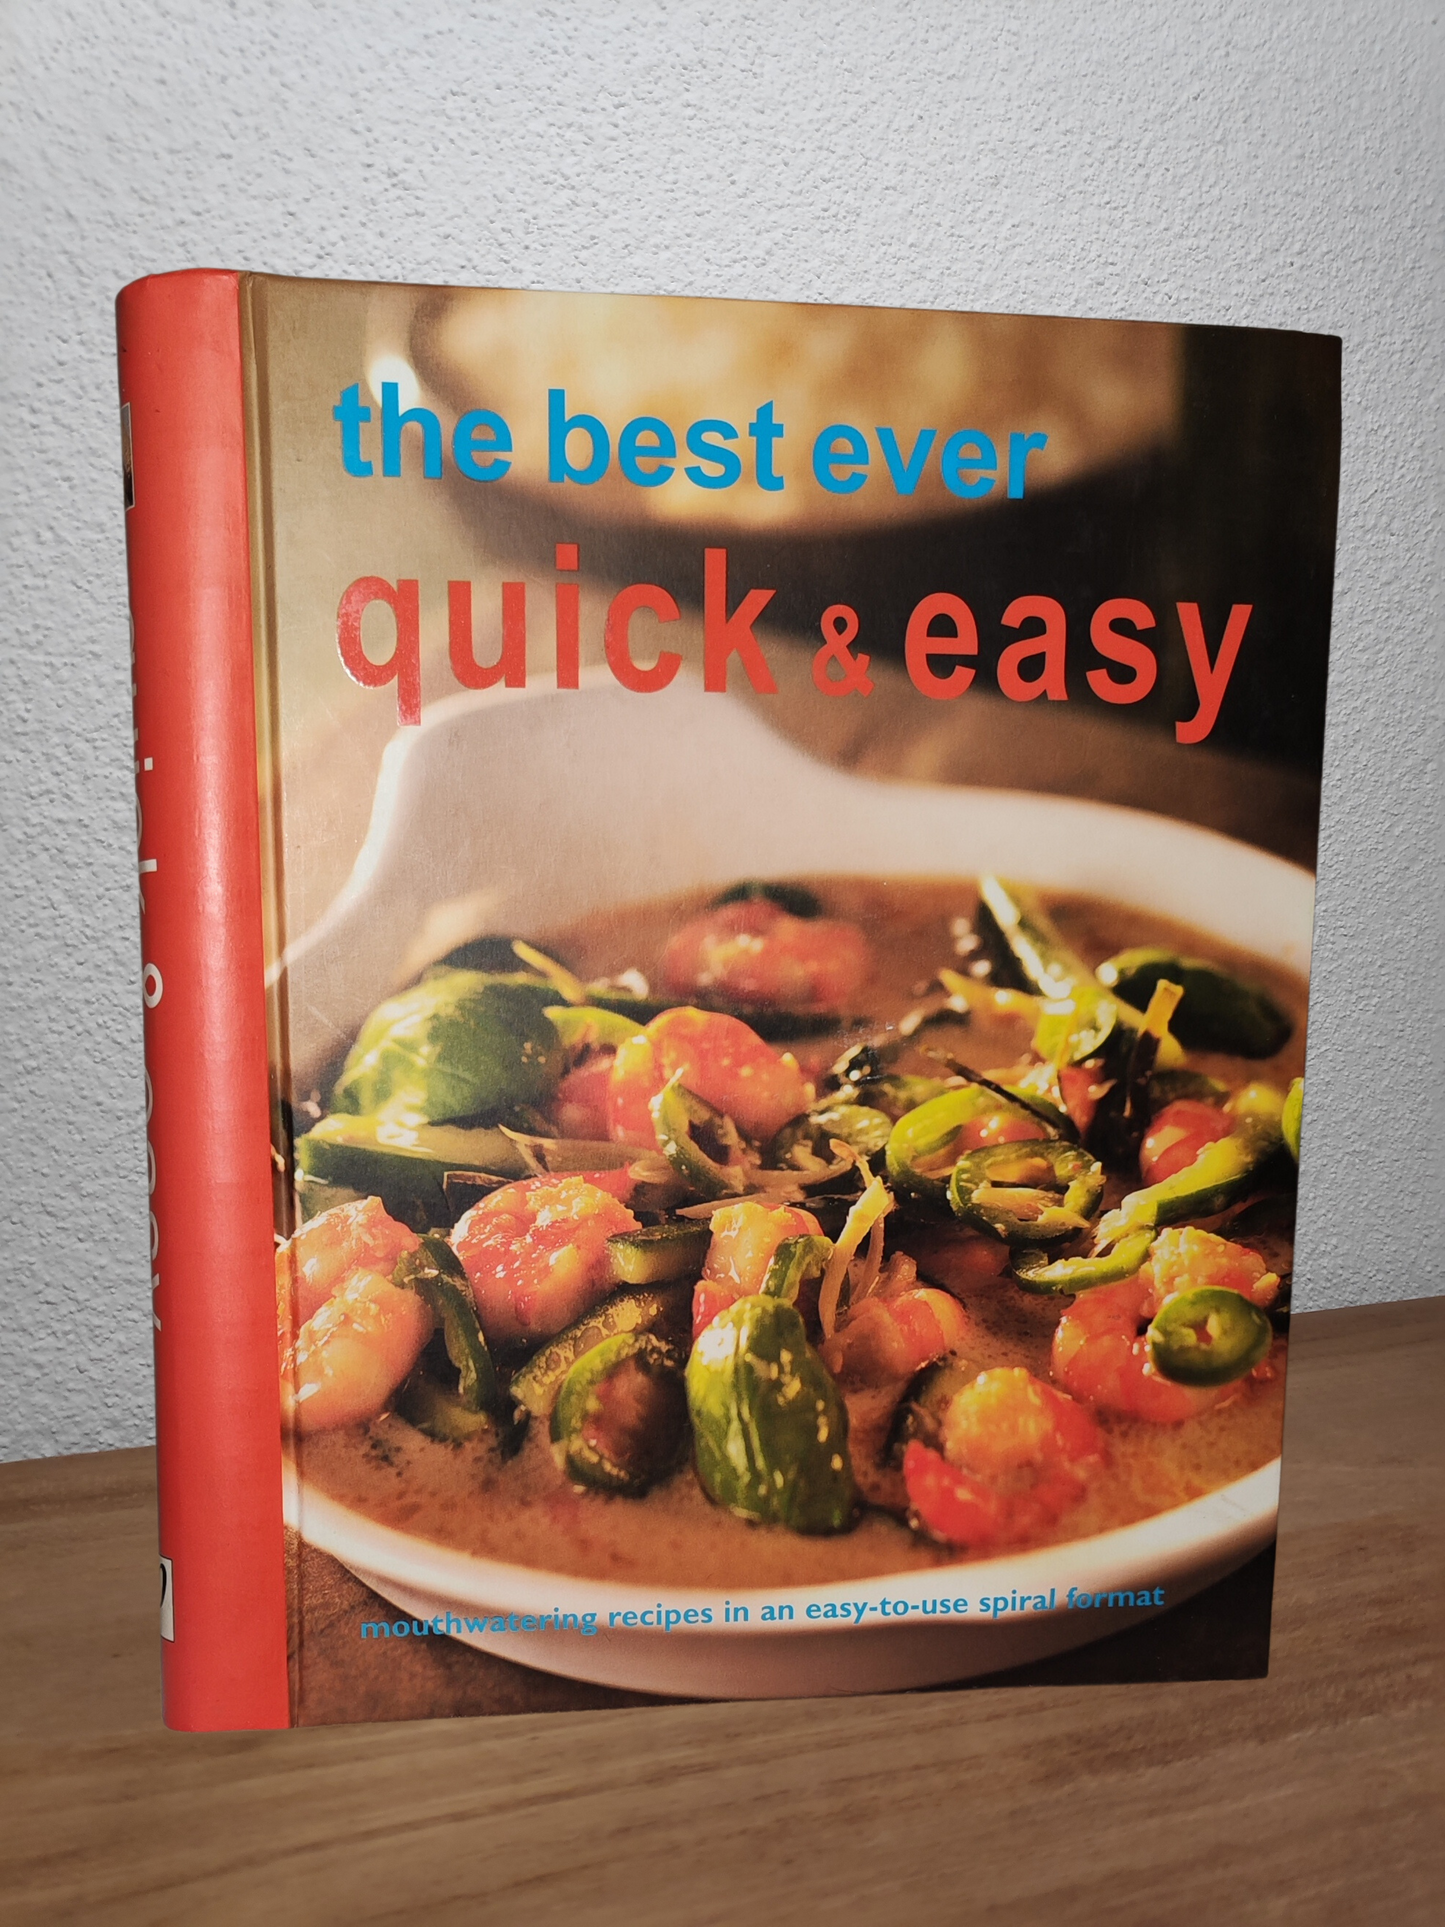 Quick & Easy - Second-hand english book to deliver in Zurich & Switzerland